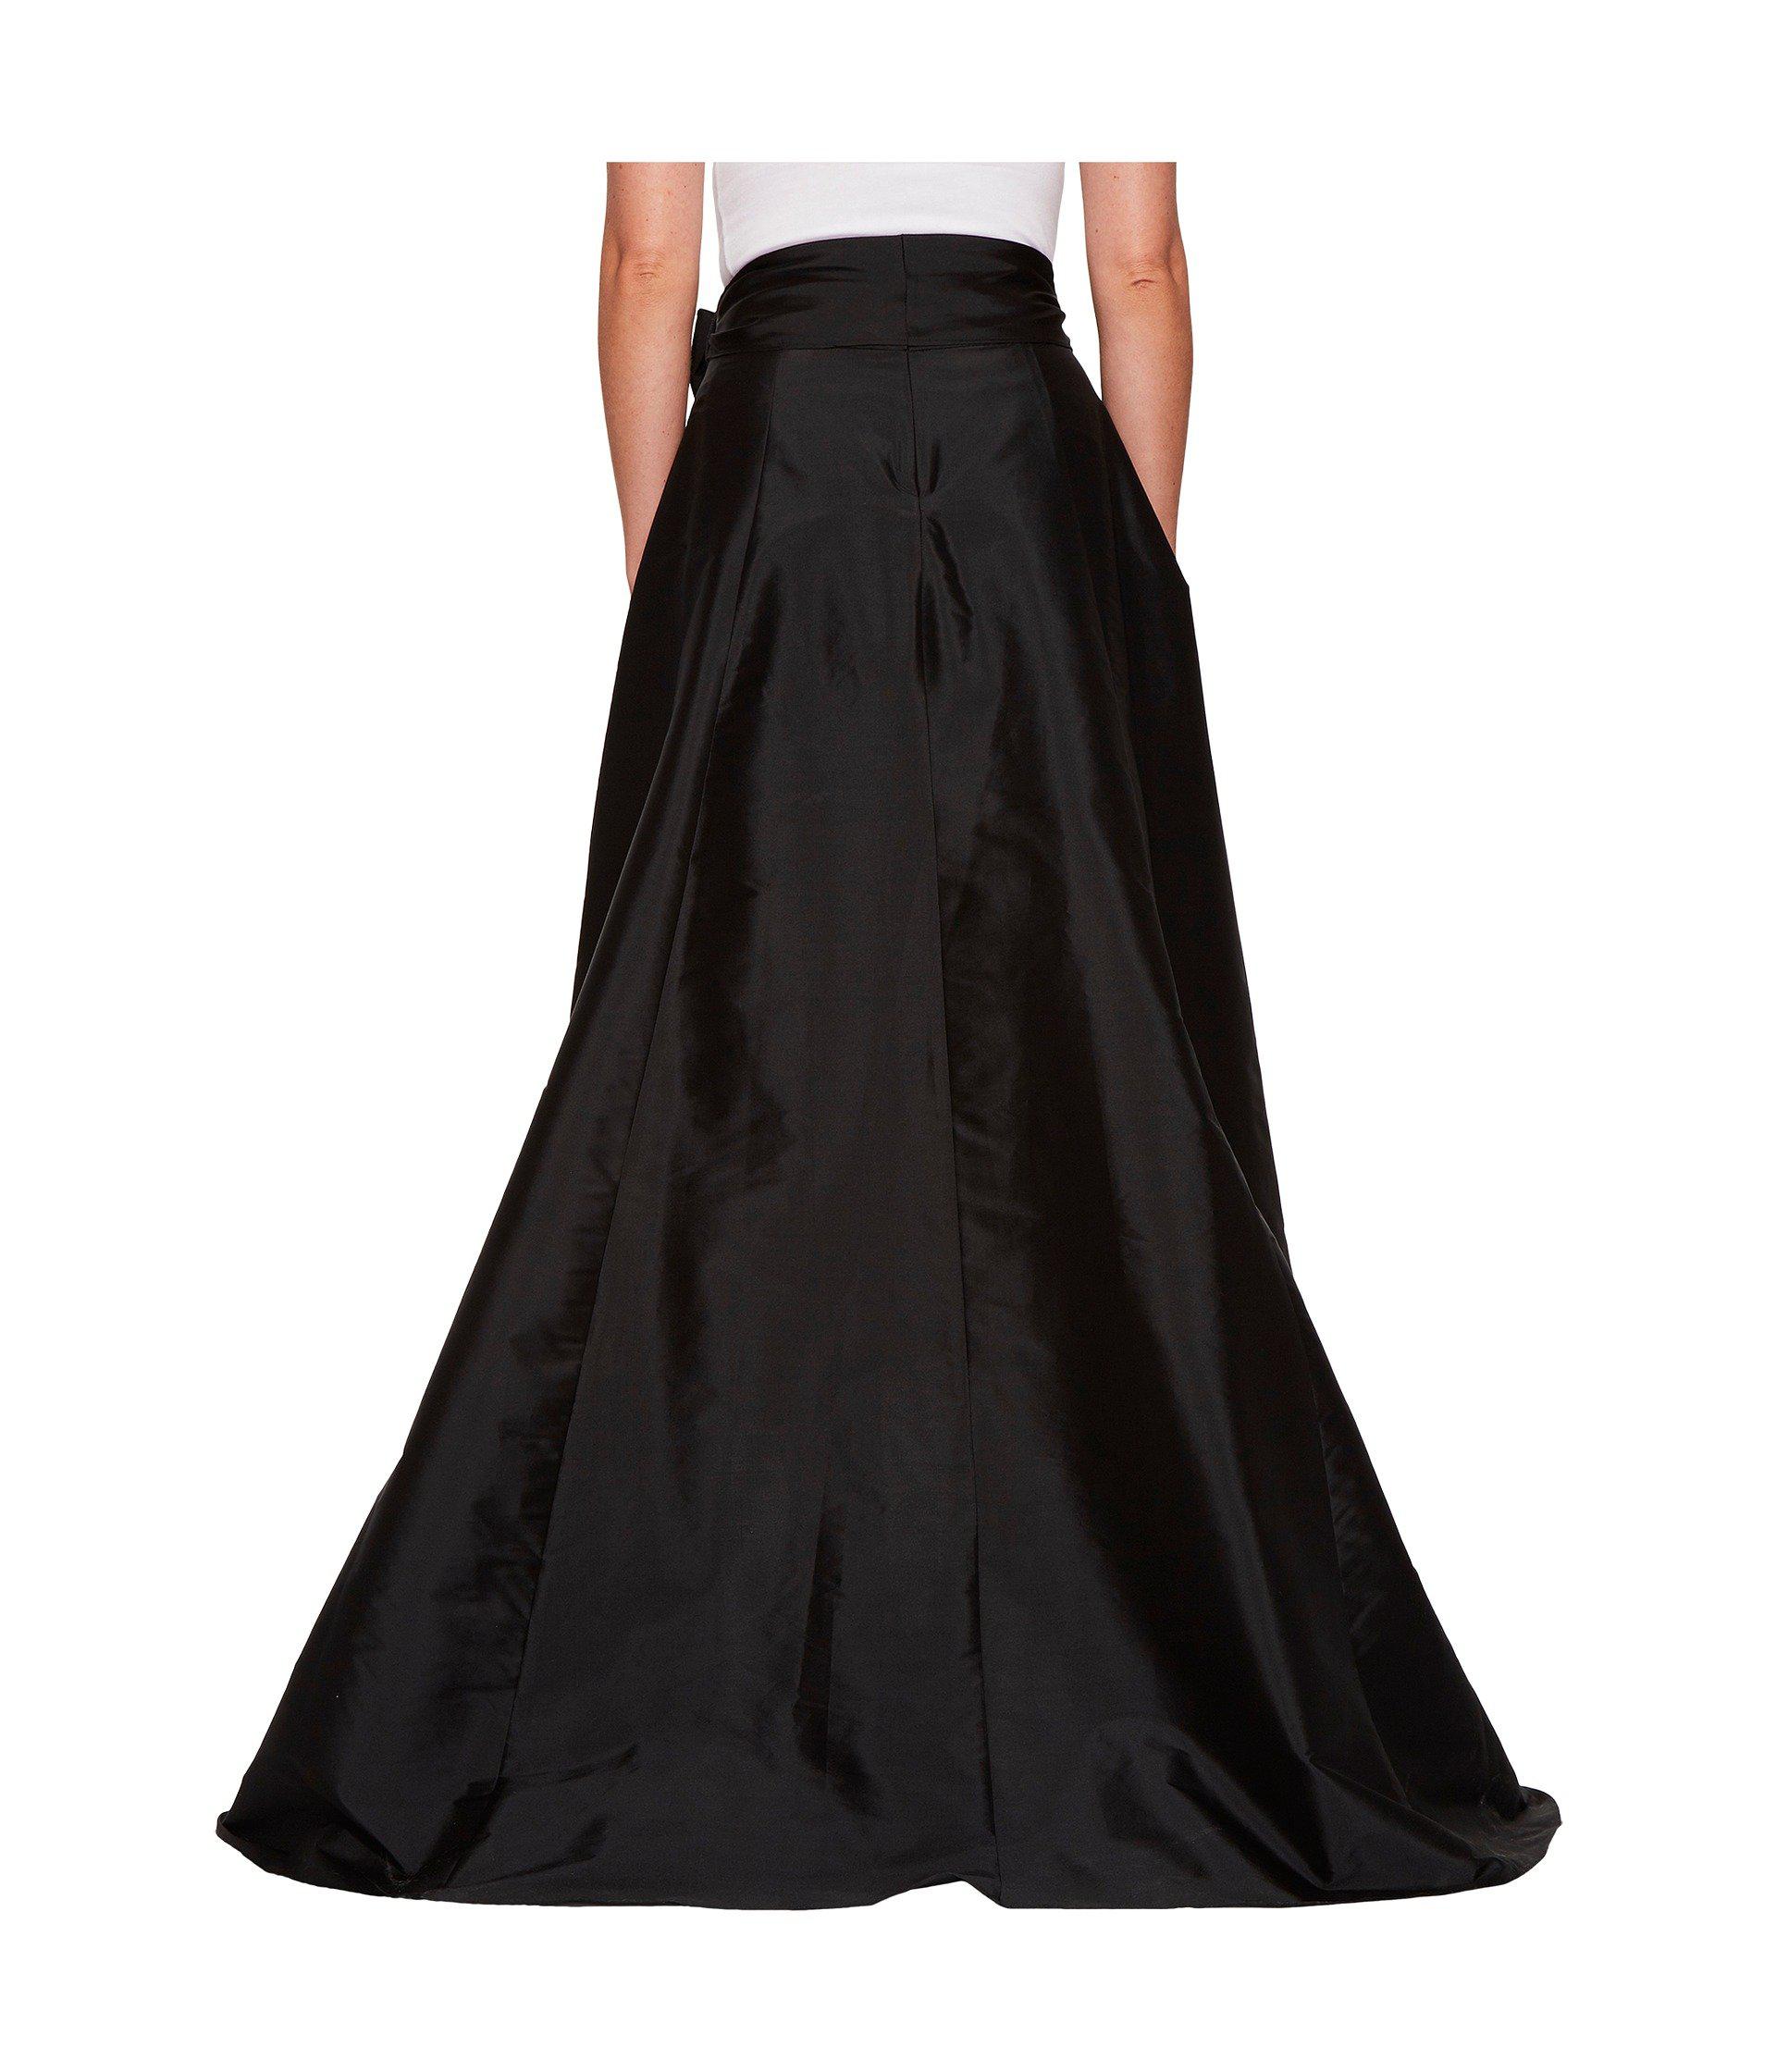 Adrianna Papell Satin High-low Ball Skirt (black) Women's Skirt - Lyst